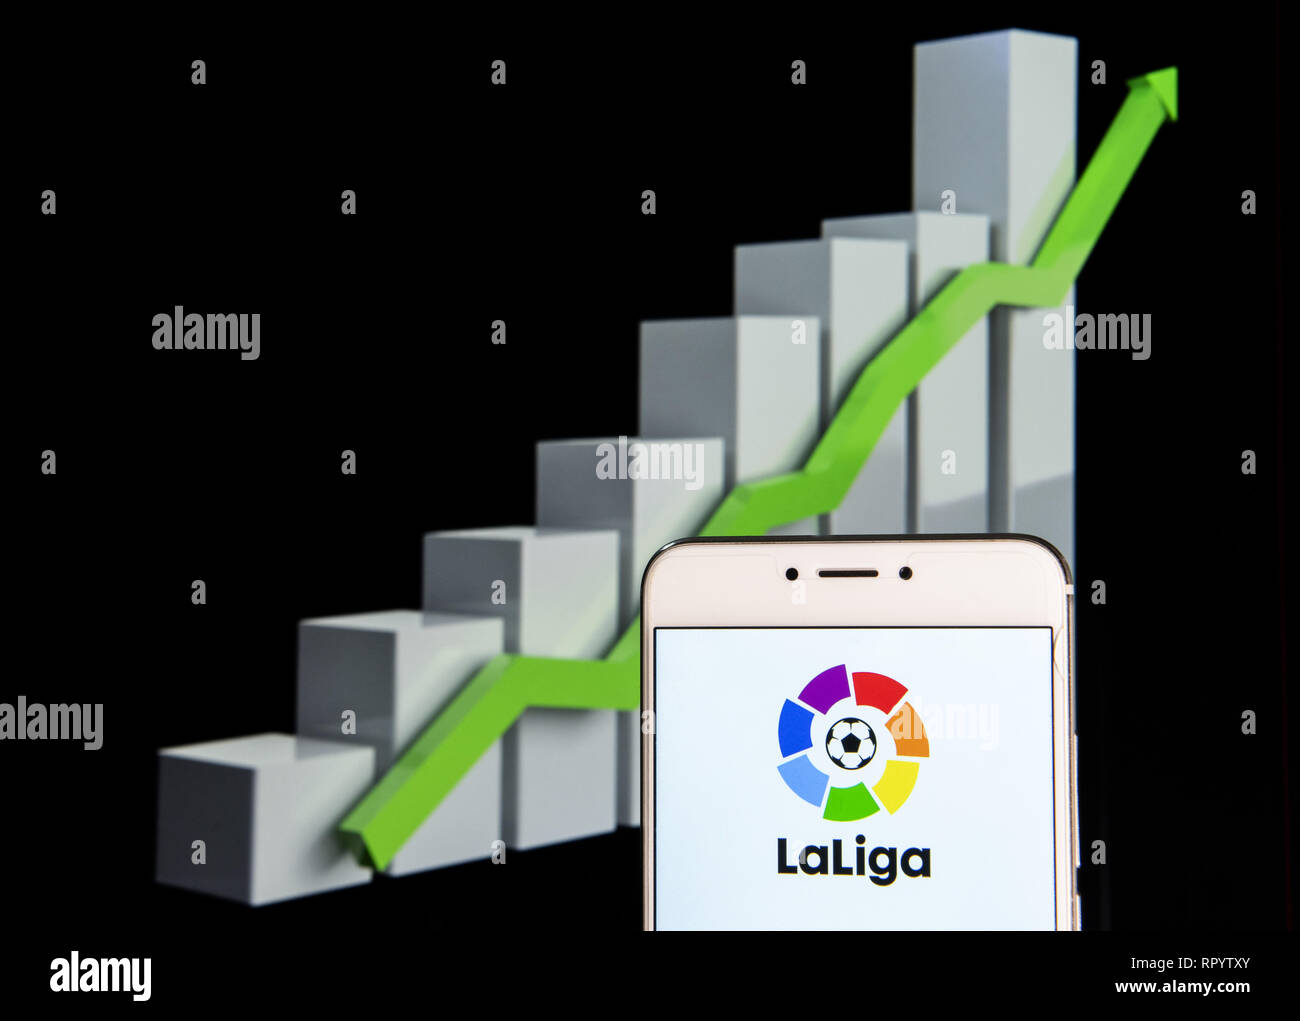 Liga Stock Chart